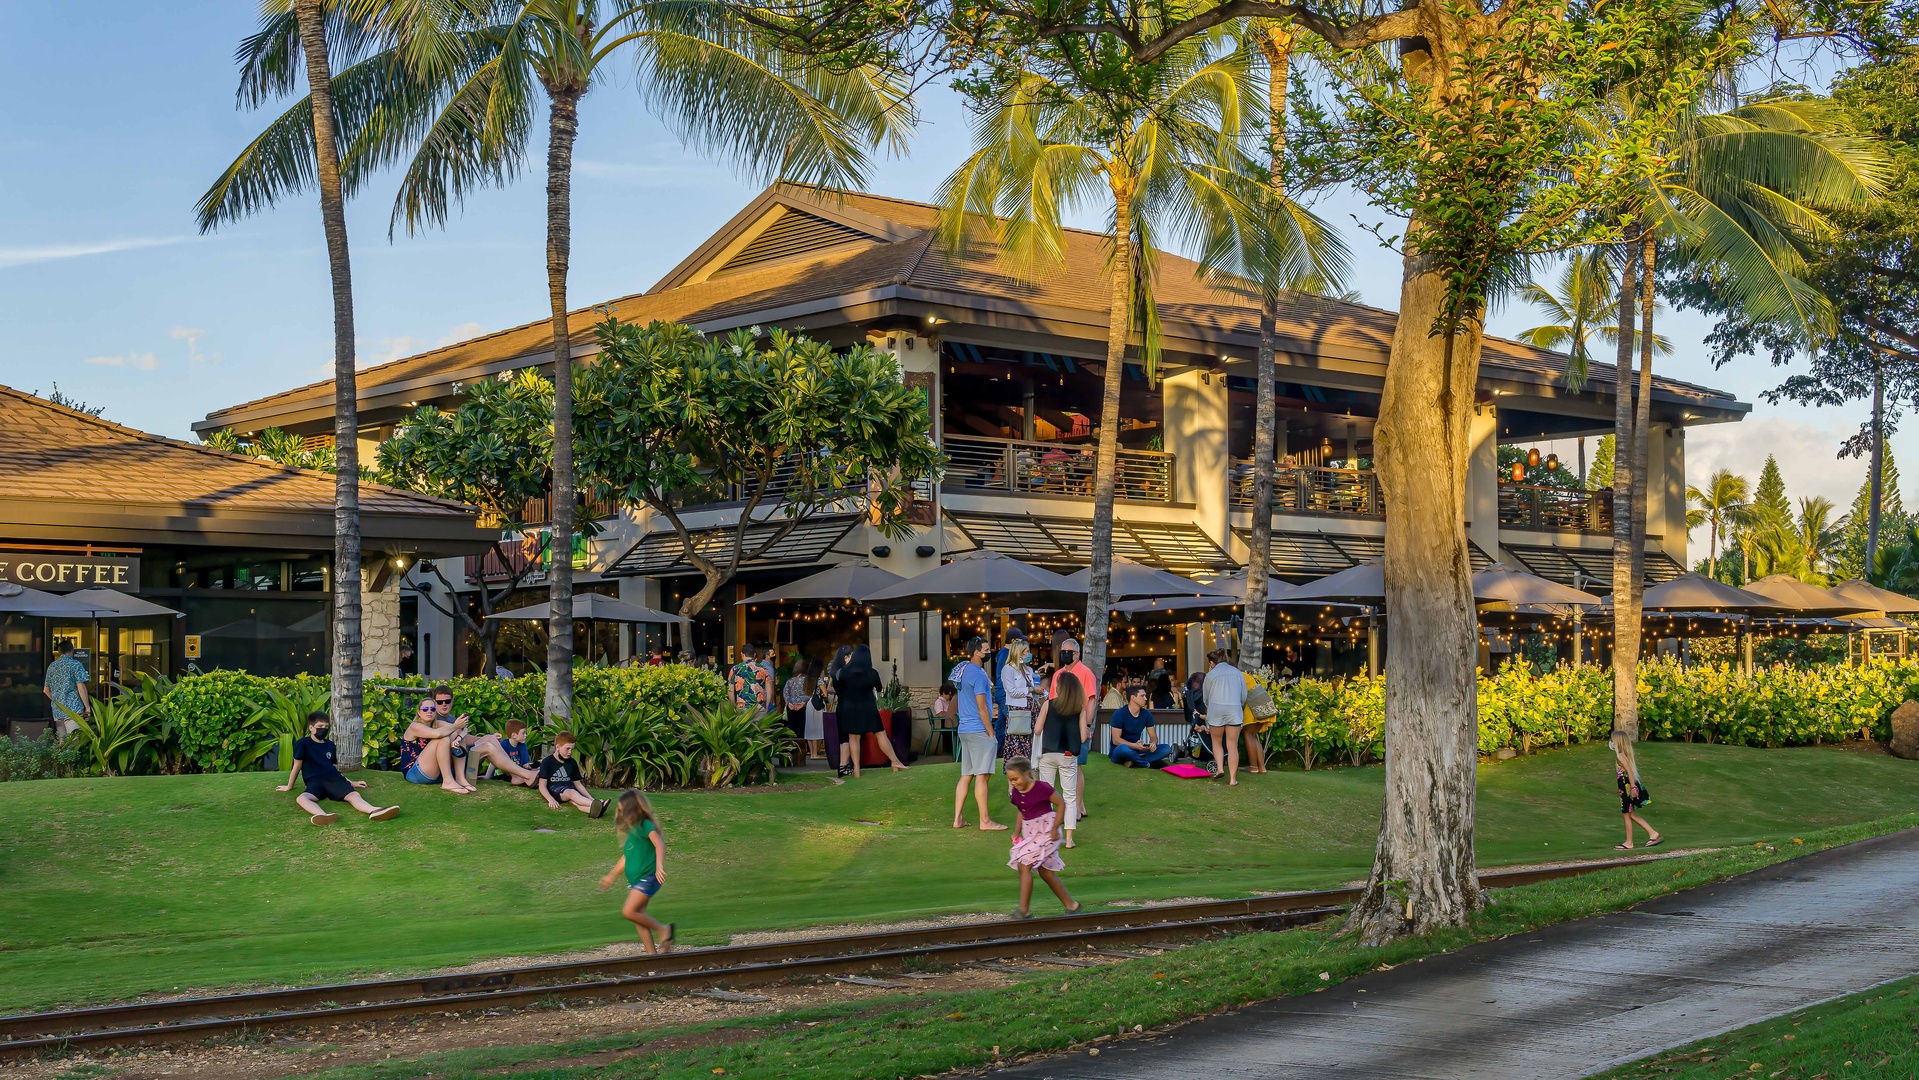 Kapolei Vacation Rentals, Fairways at Ko Olina 27H - Shopping and dining on the island.